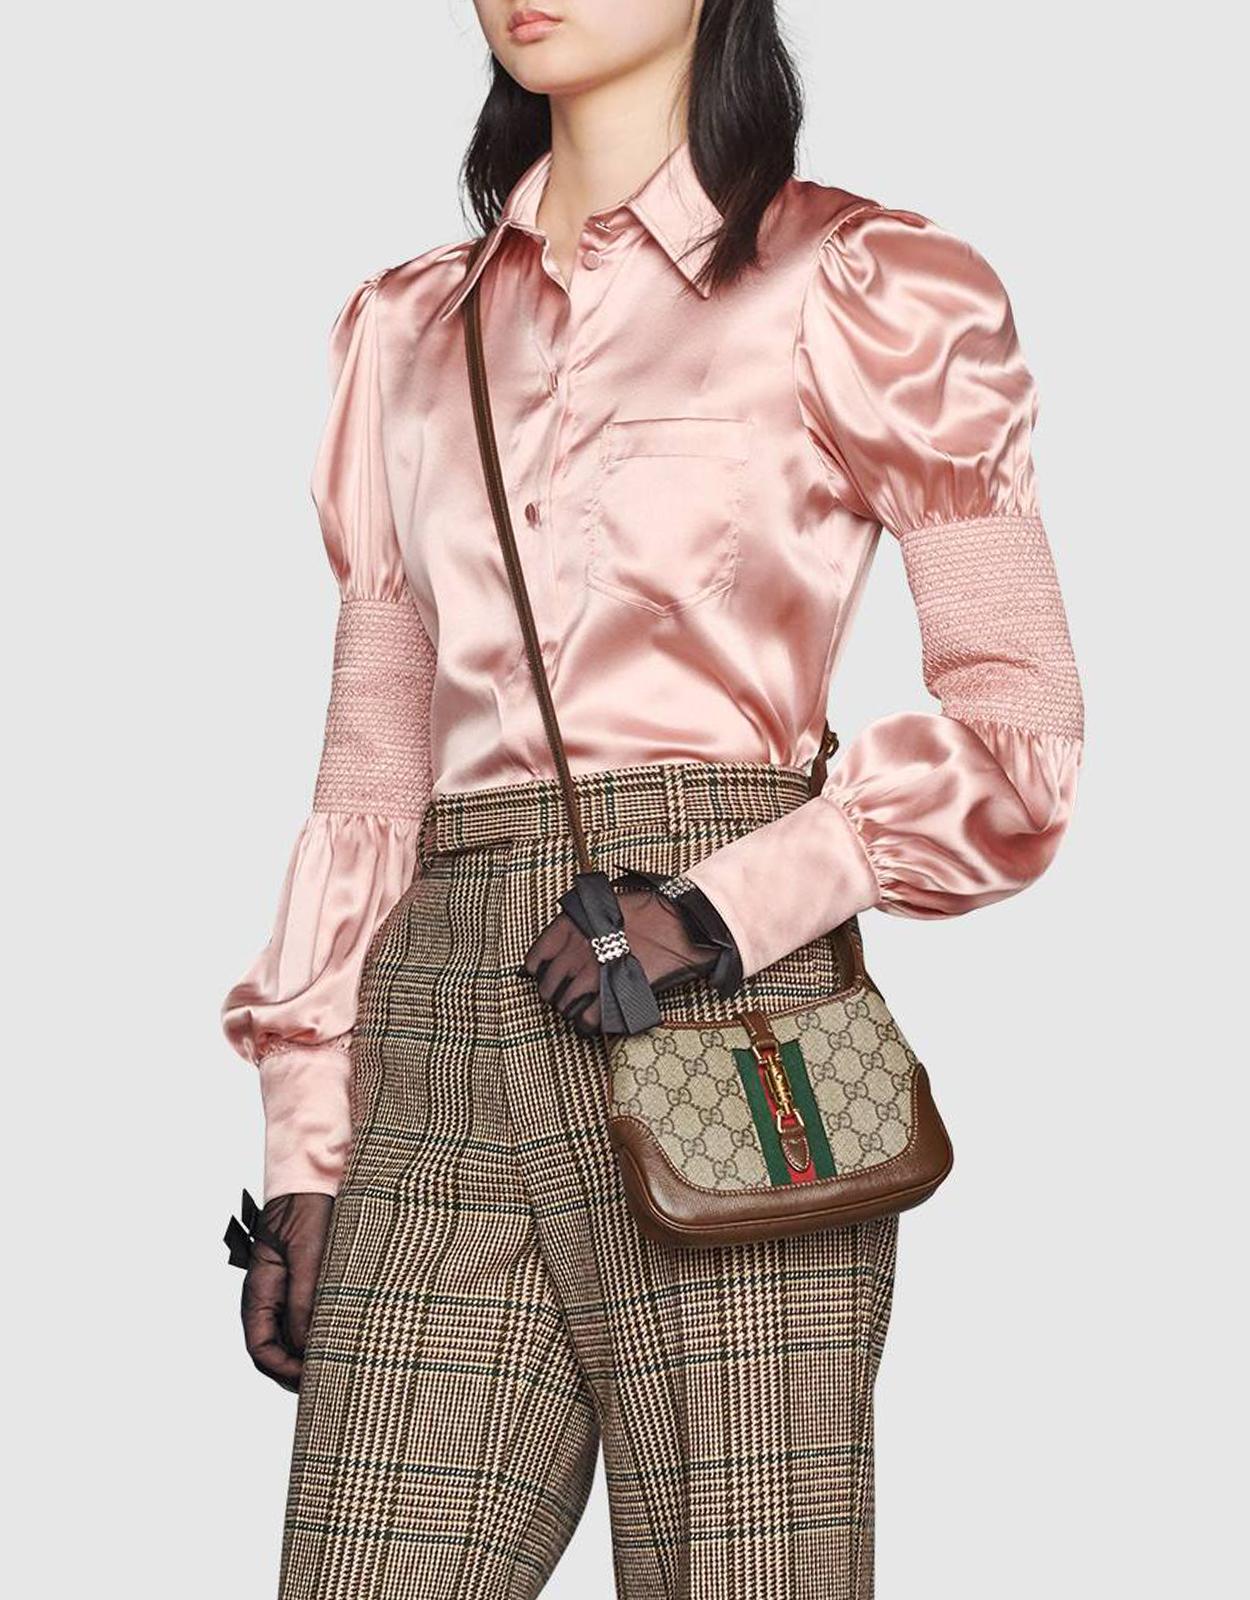 Gucci Jackie 1961 Shoulder Bag Small GG Supreme Beige/Ebony in Canvas - US